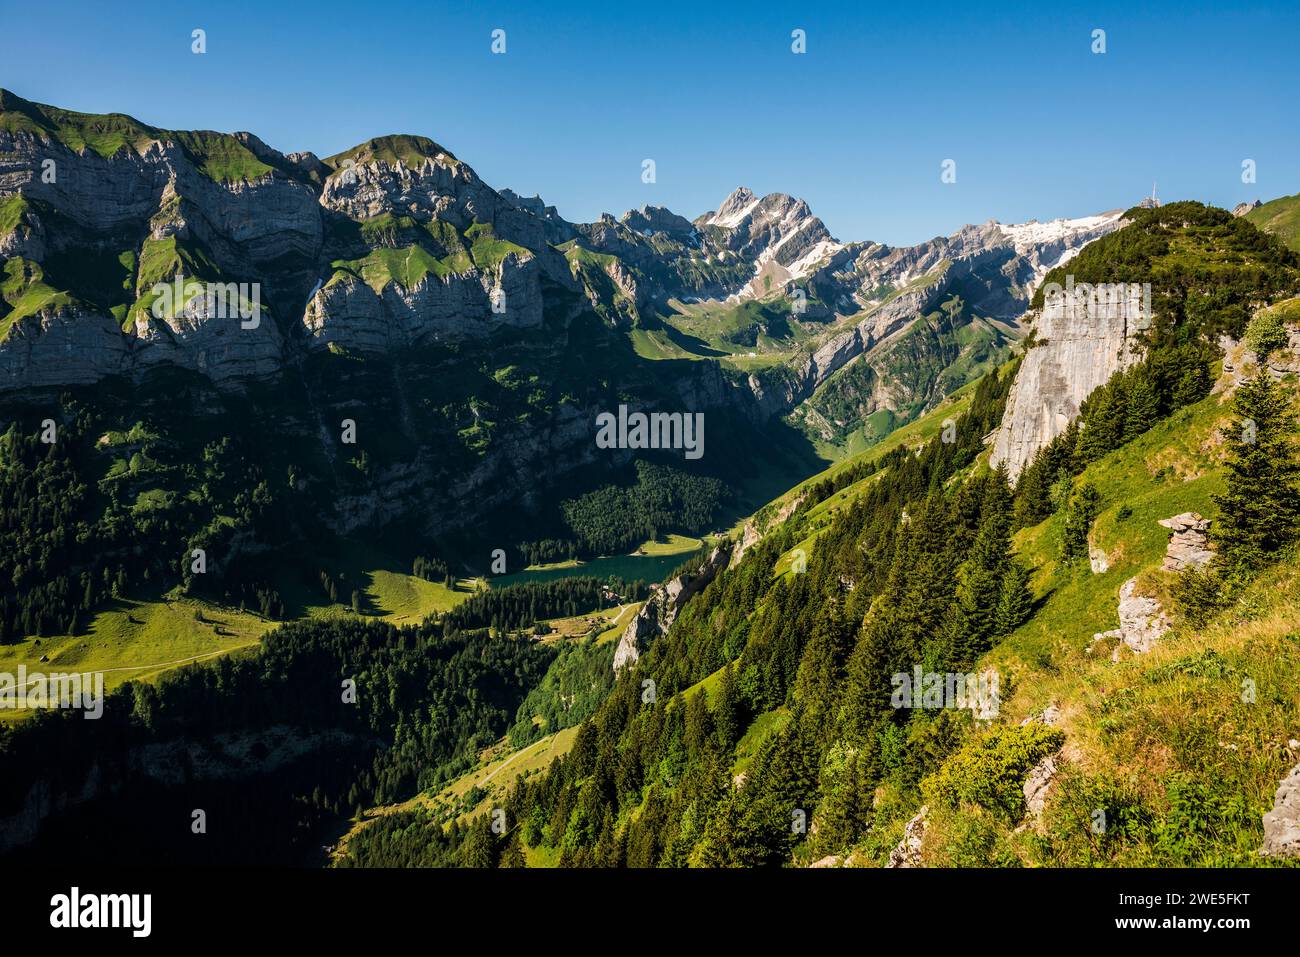 Steep mountains and lake, Seealpsee, Wasserauen, Alpstein, Appenzell Alps, Canton of Appenzell Innerrhoden, Switzerland Stock Photo